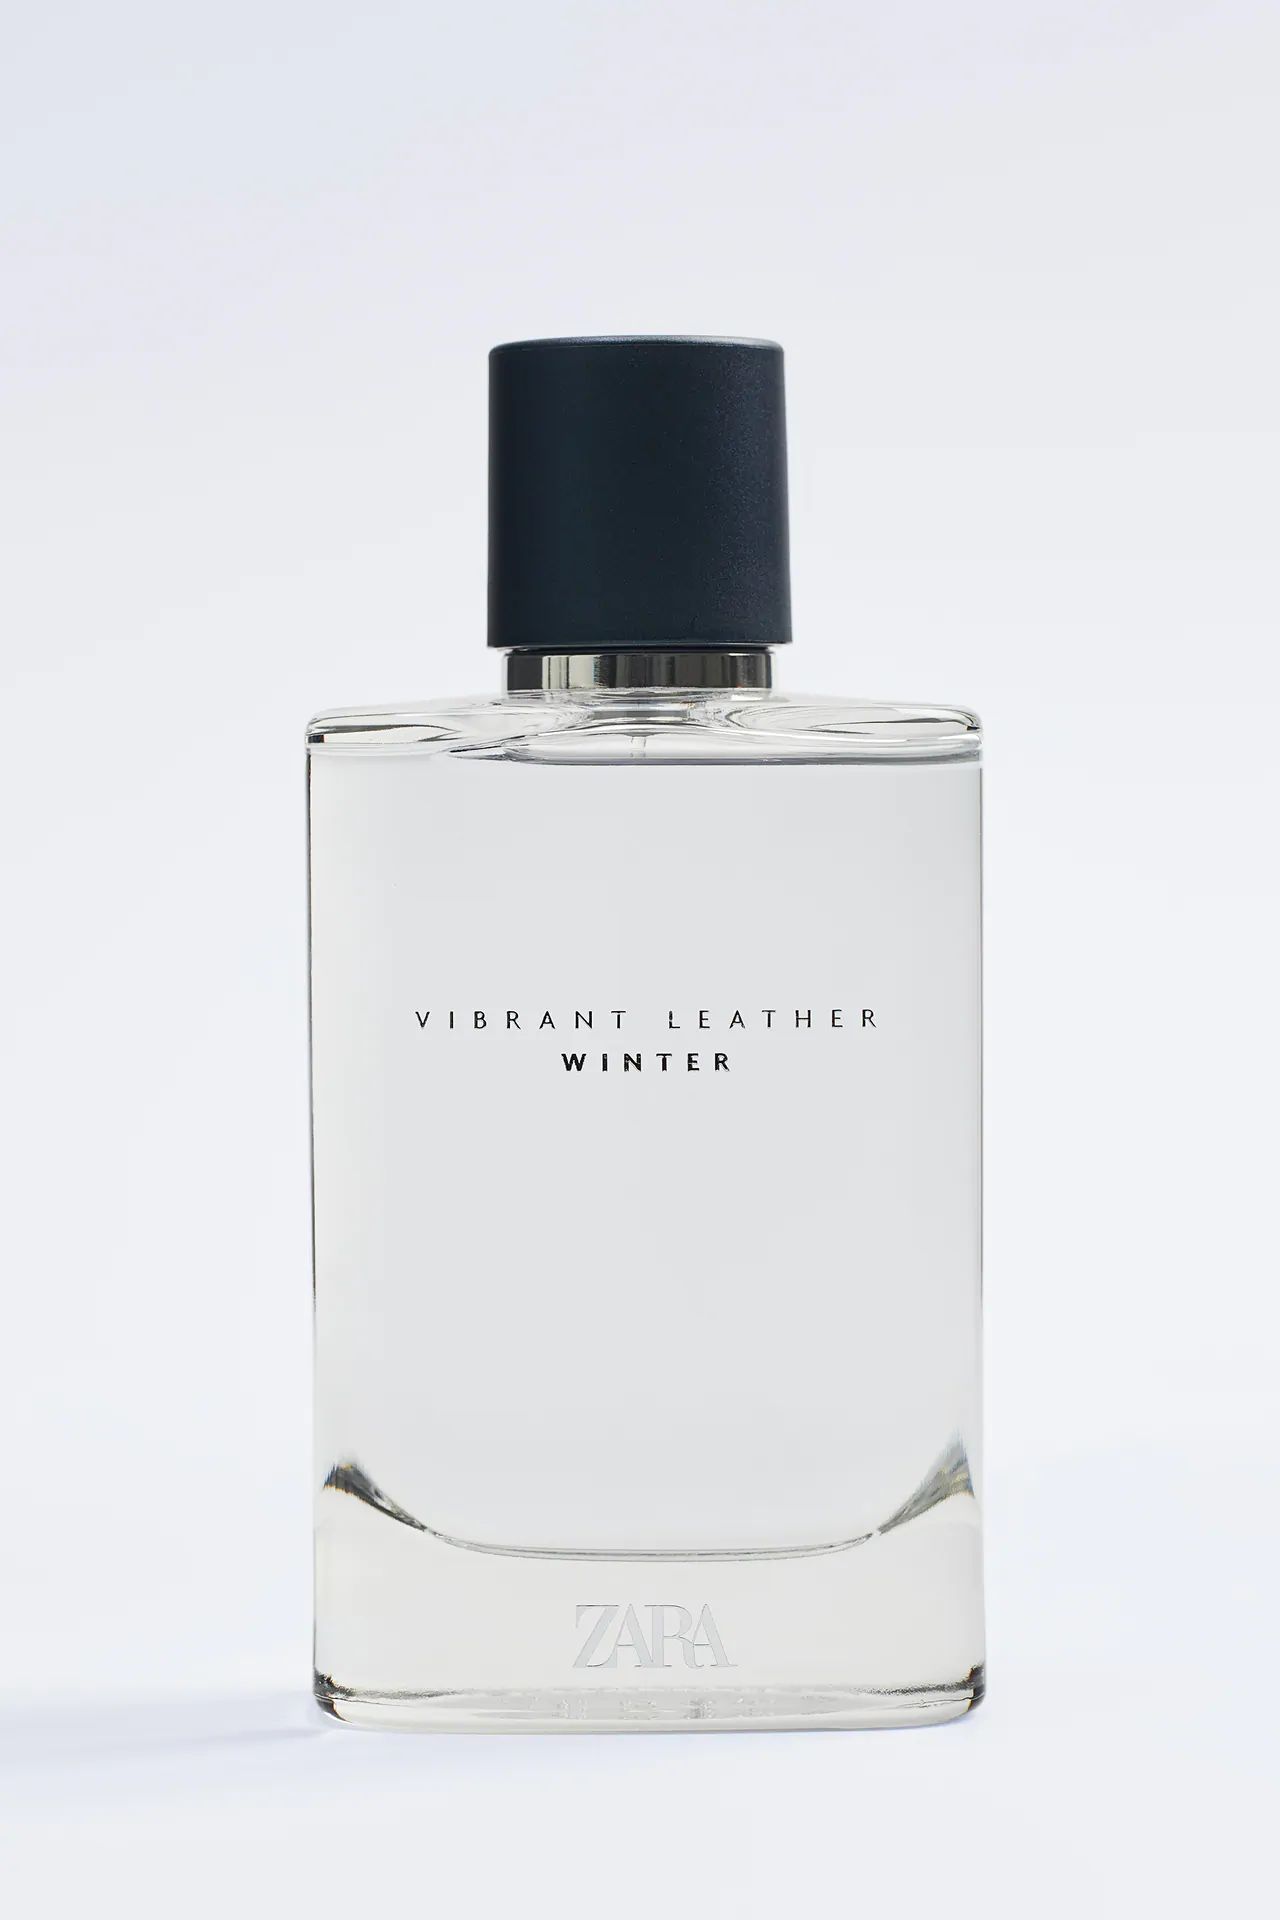 Vibrant Leather Winter Zara cologne - a new fragrance for men 2020